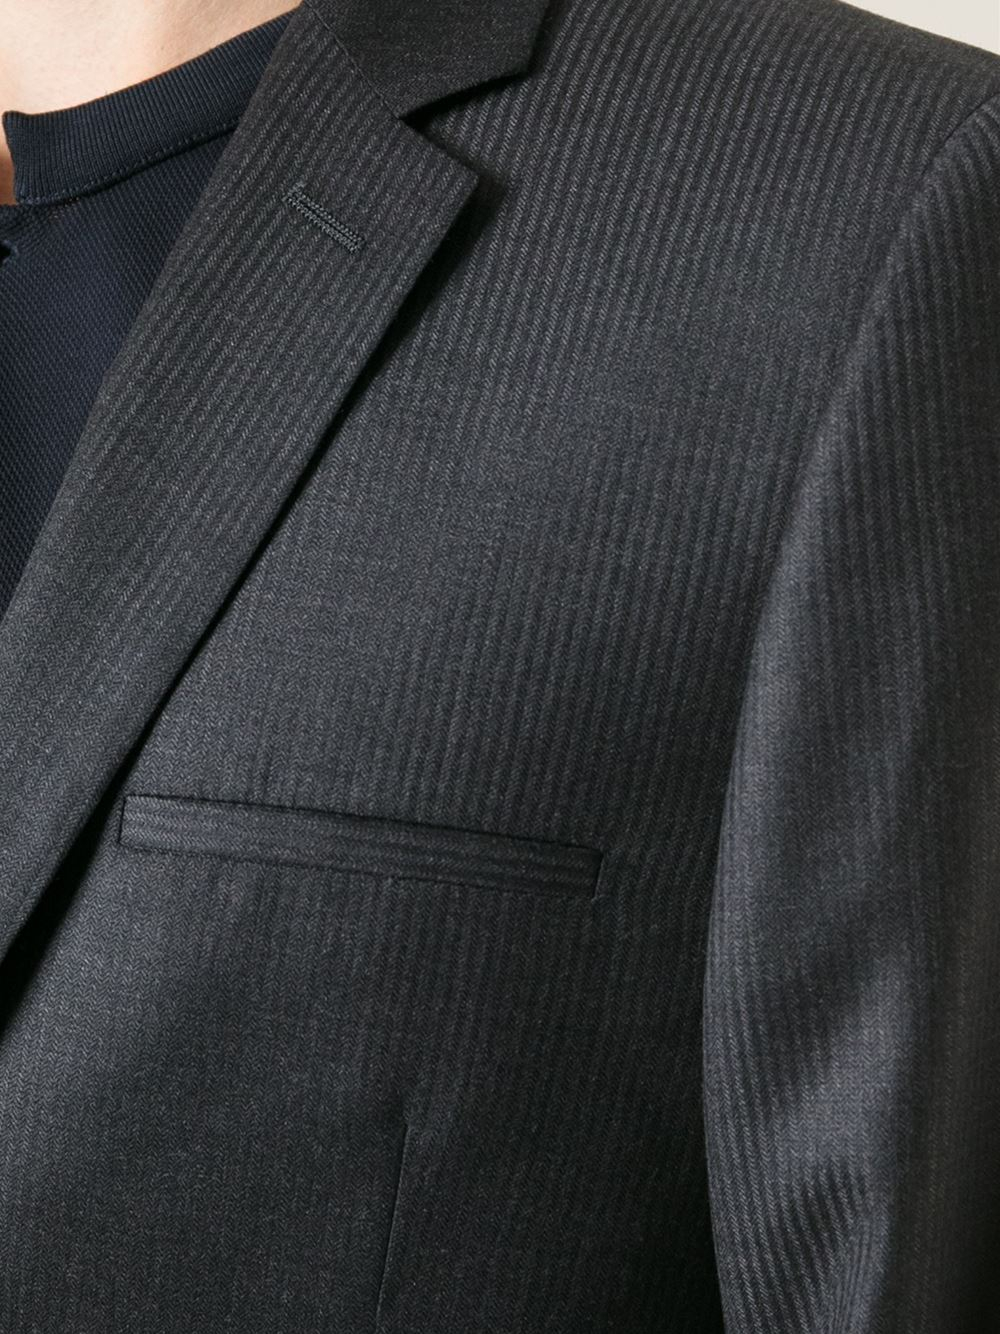 Calvin Klein Pinstripe Suit in Grey (Grey) for Men - Lyst